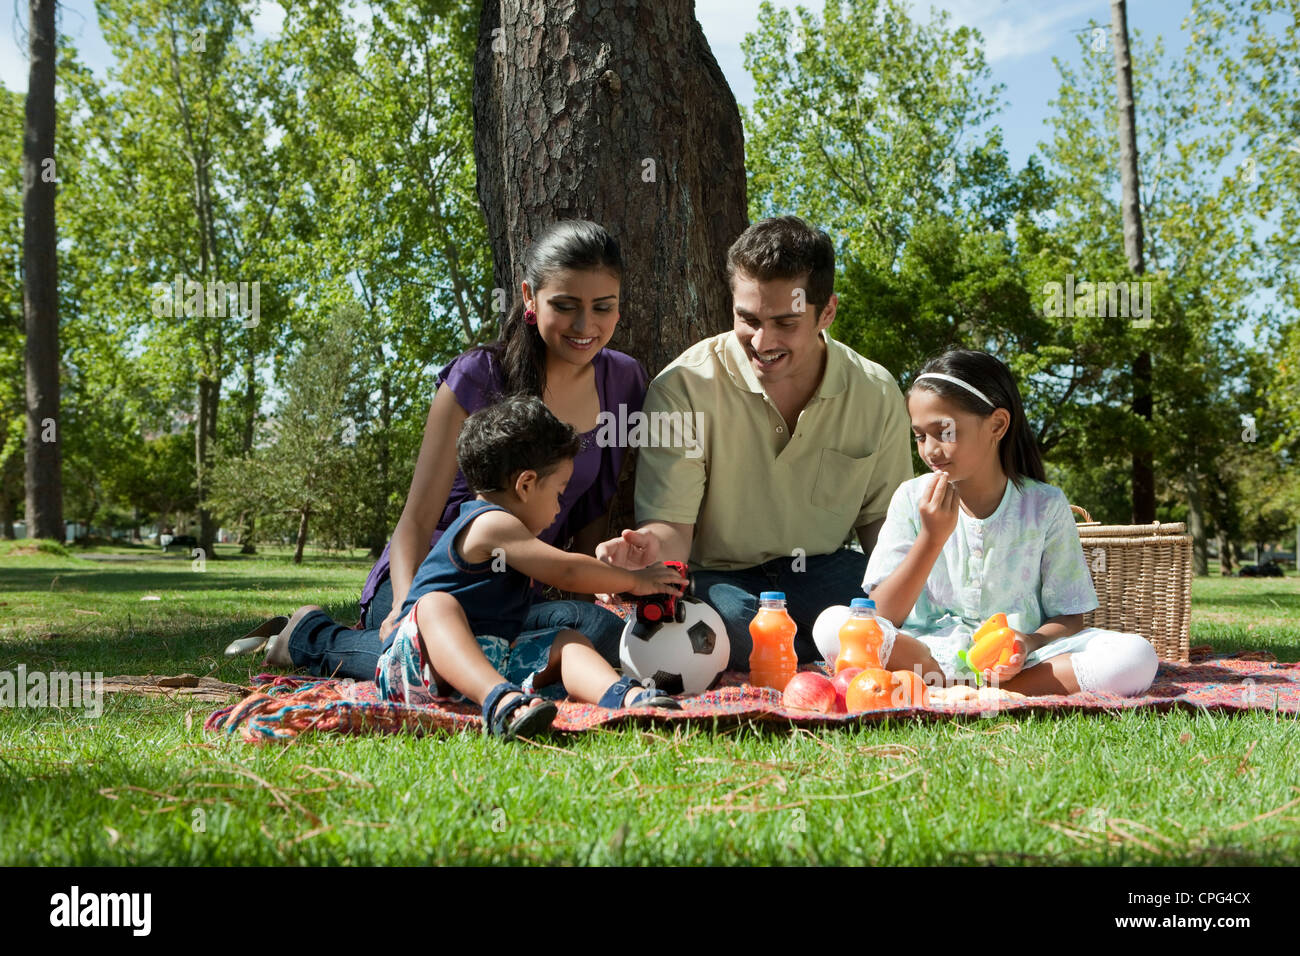 Family picnic in the park. Stock Photo